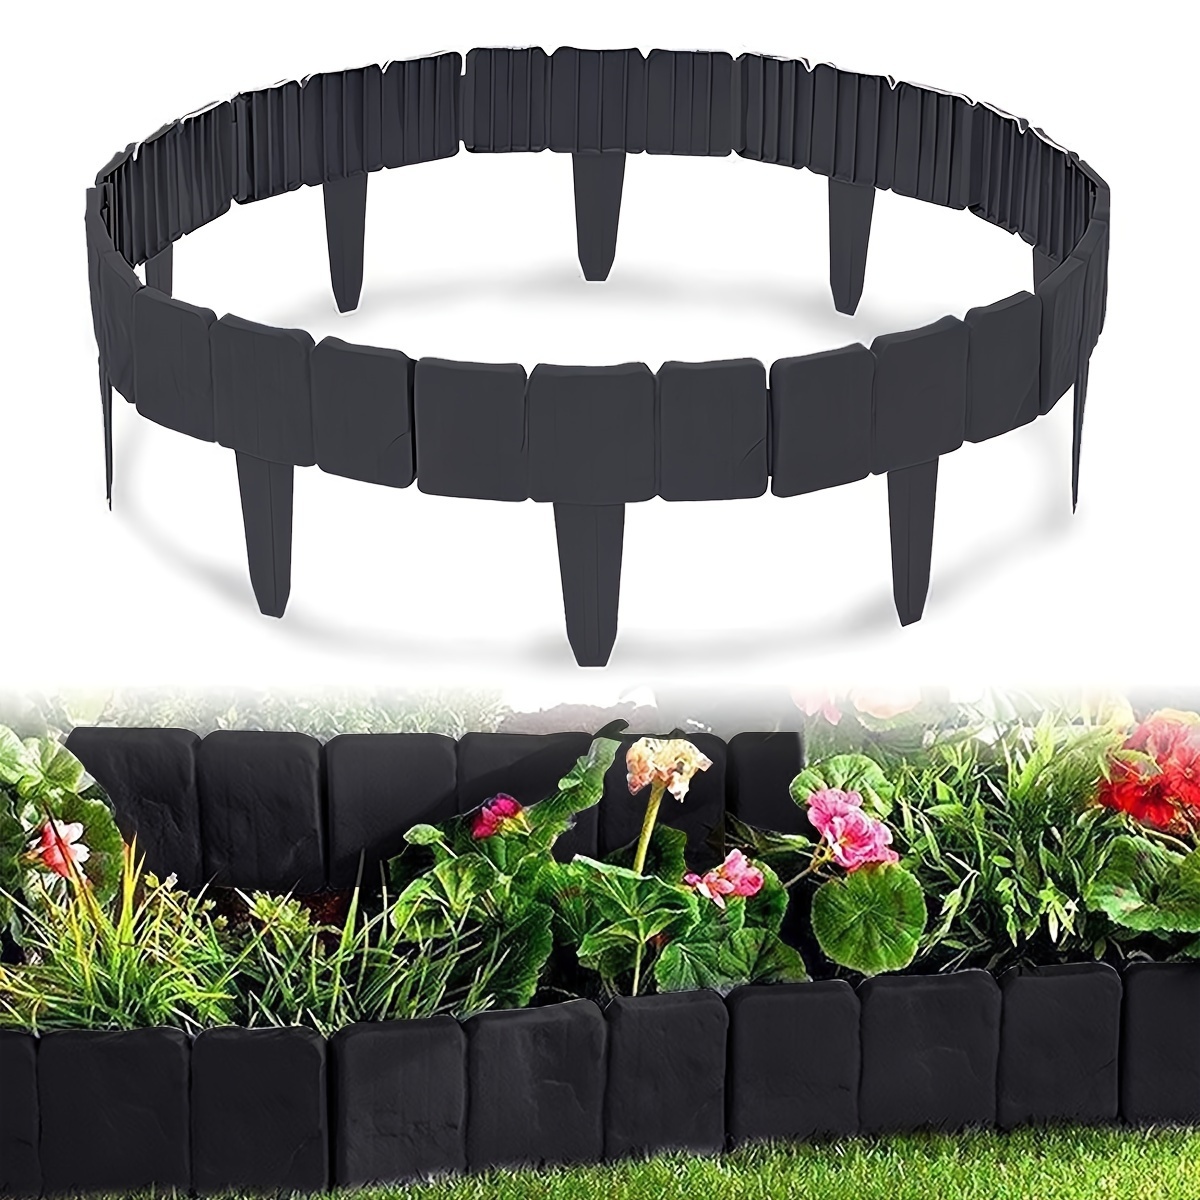 

10pcs No-dig Resin Garden Landscape Edging Borders, With Interlocking Flexible Design, Easy Installation For Lawn, Garden, Flower Bed Barrier, Black